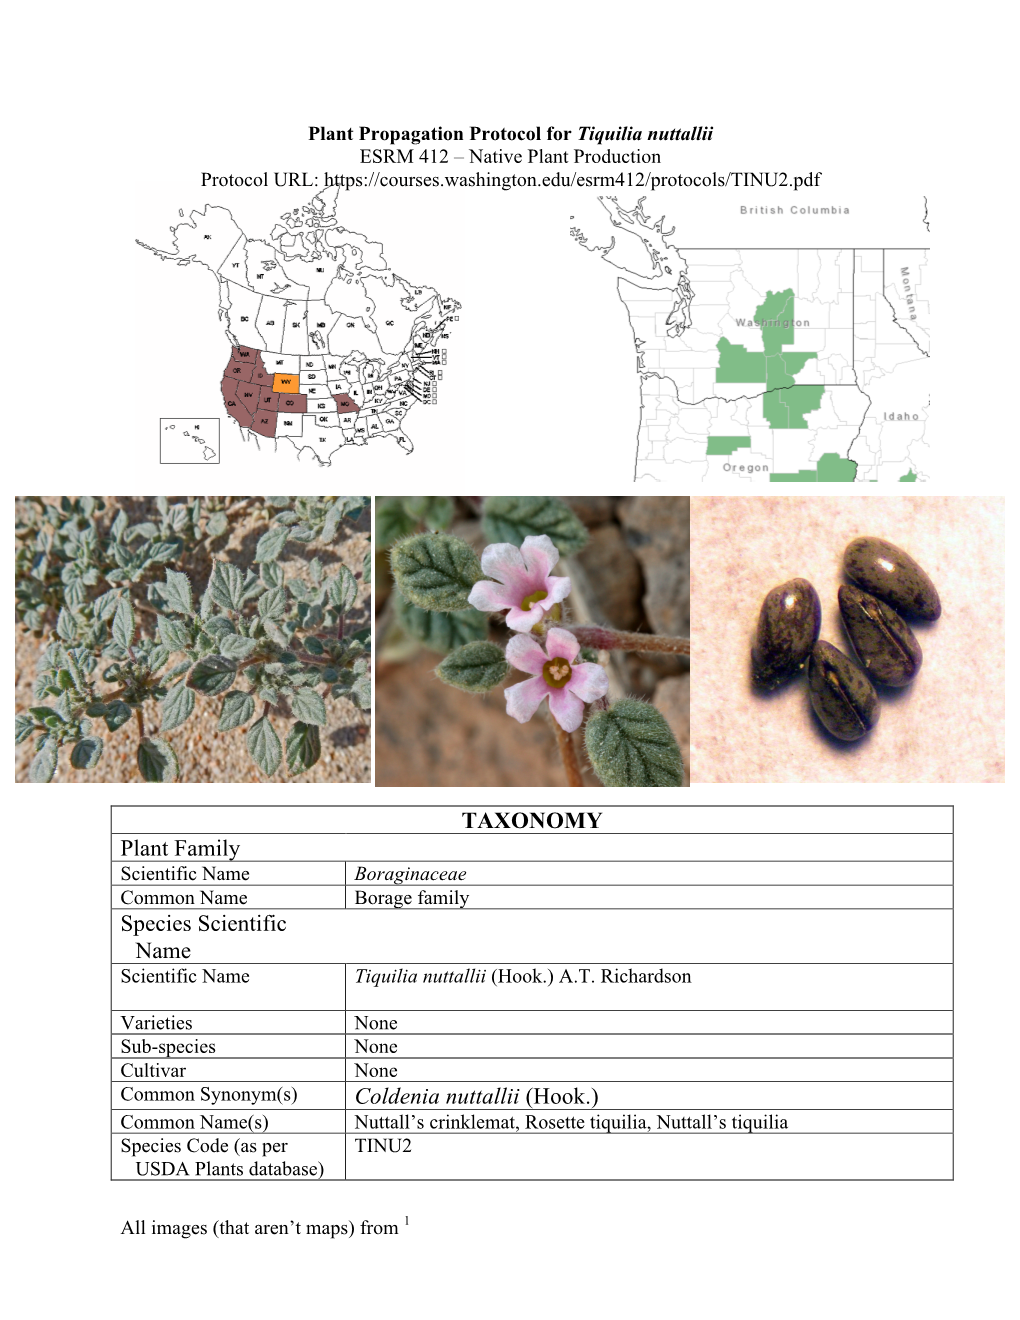 TAXONOMY Plant Family Species Scientific Name Coldenia Nuttallii